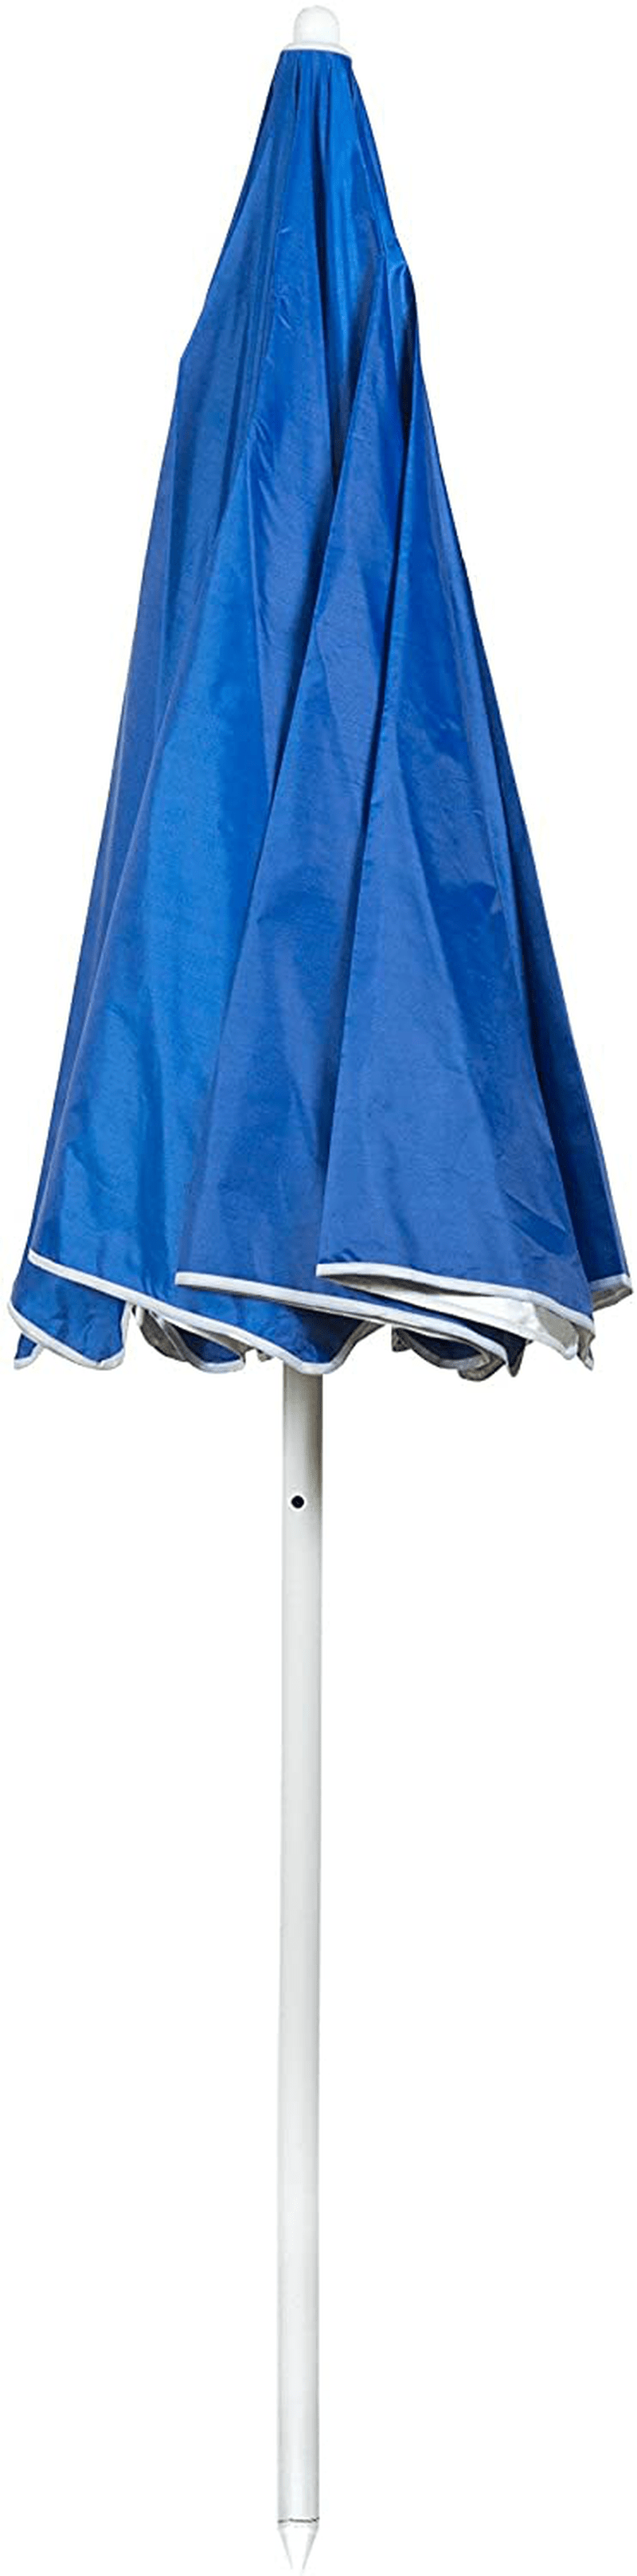 6.5' Portable Beach and Sports Umbrella by Trademark Innovations (Blue) Home & Garden > Lawn & Garden > Outdoor Living > Outdoor Umbrella & Sunshade Accessories Trademark Innovations   